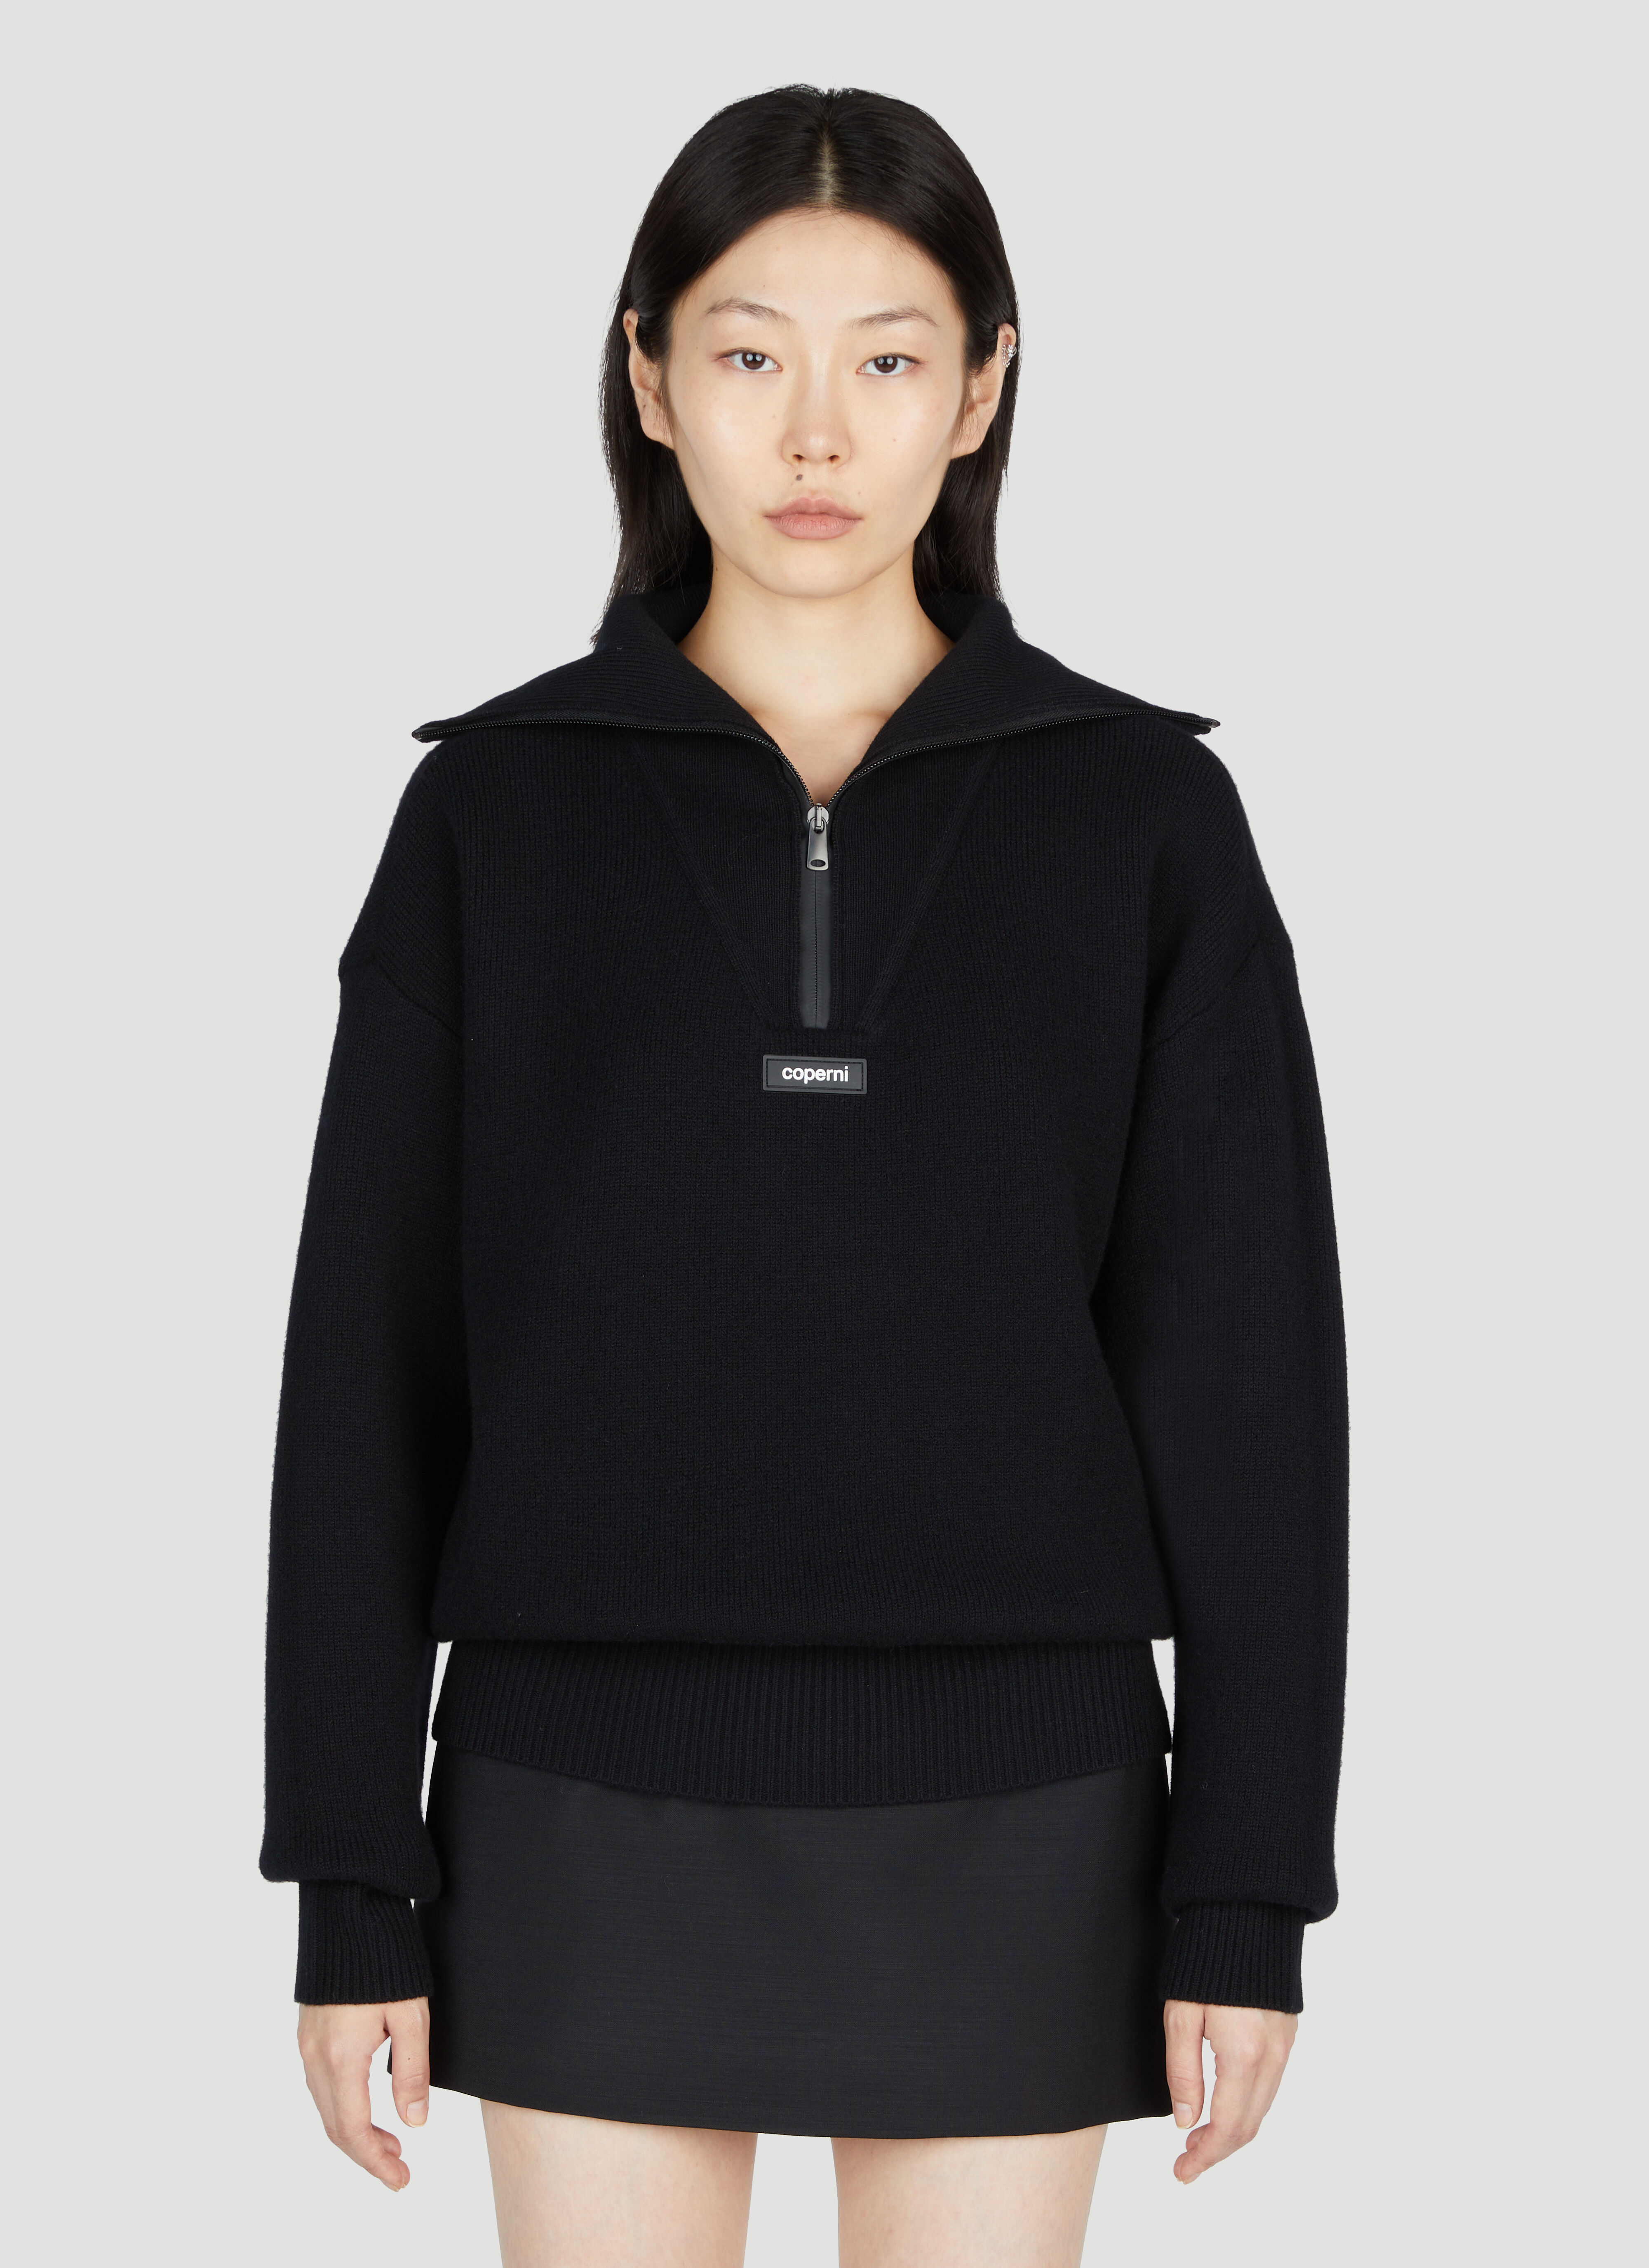 Coperni Half-Zip Boxy Sweater Black cpn0255010